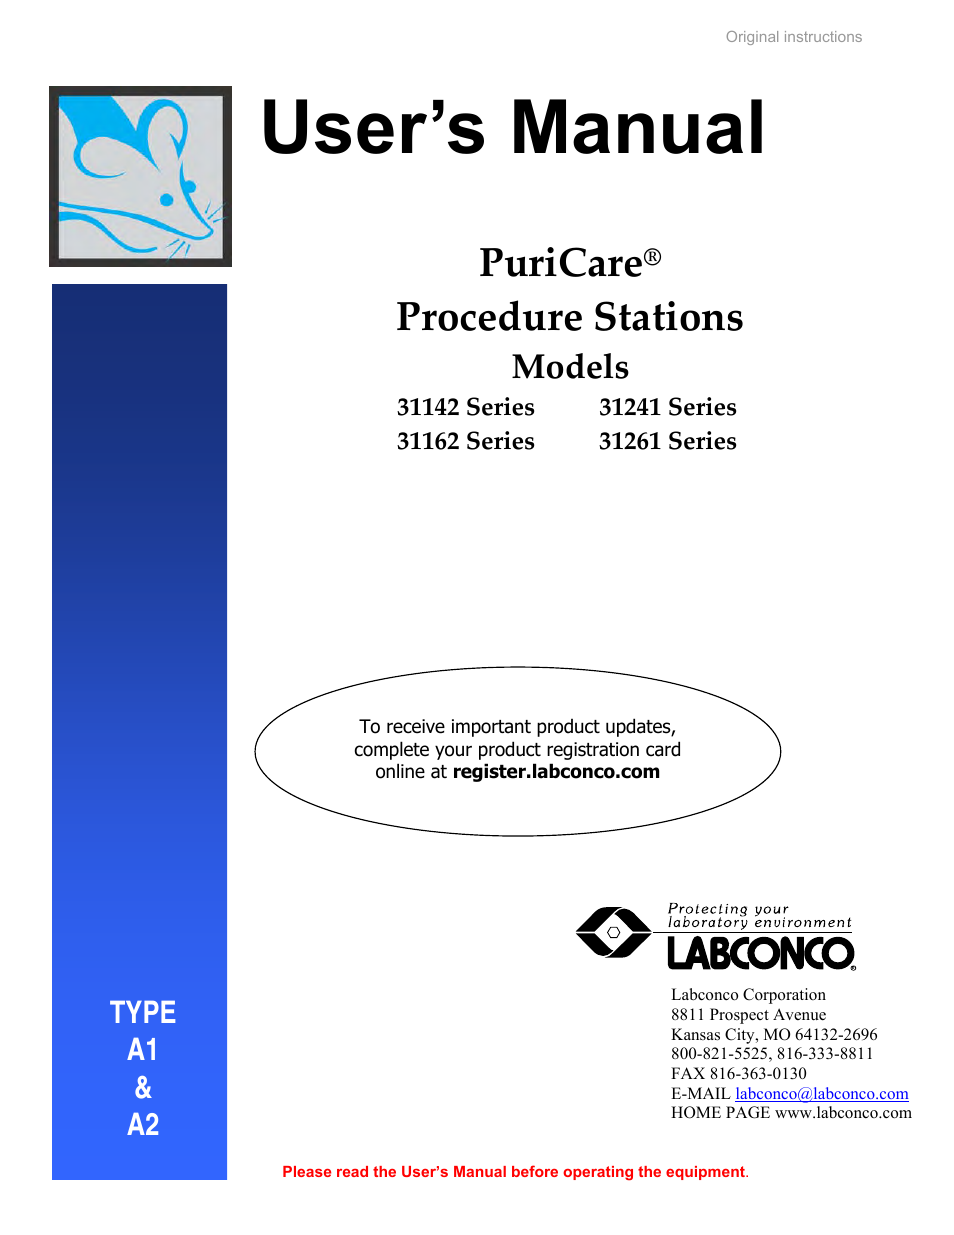 PuriCare Procedure Stations 31162 Series